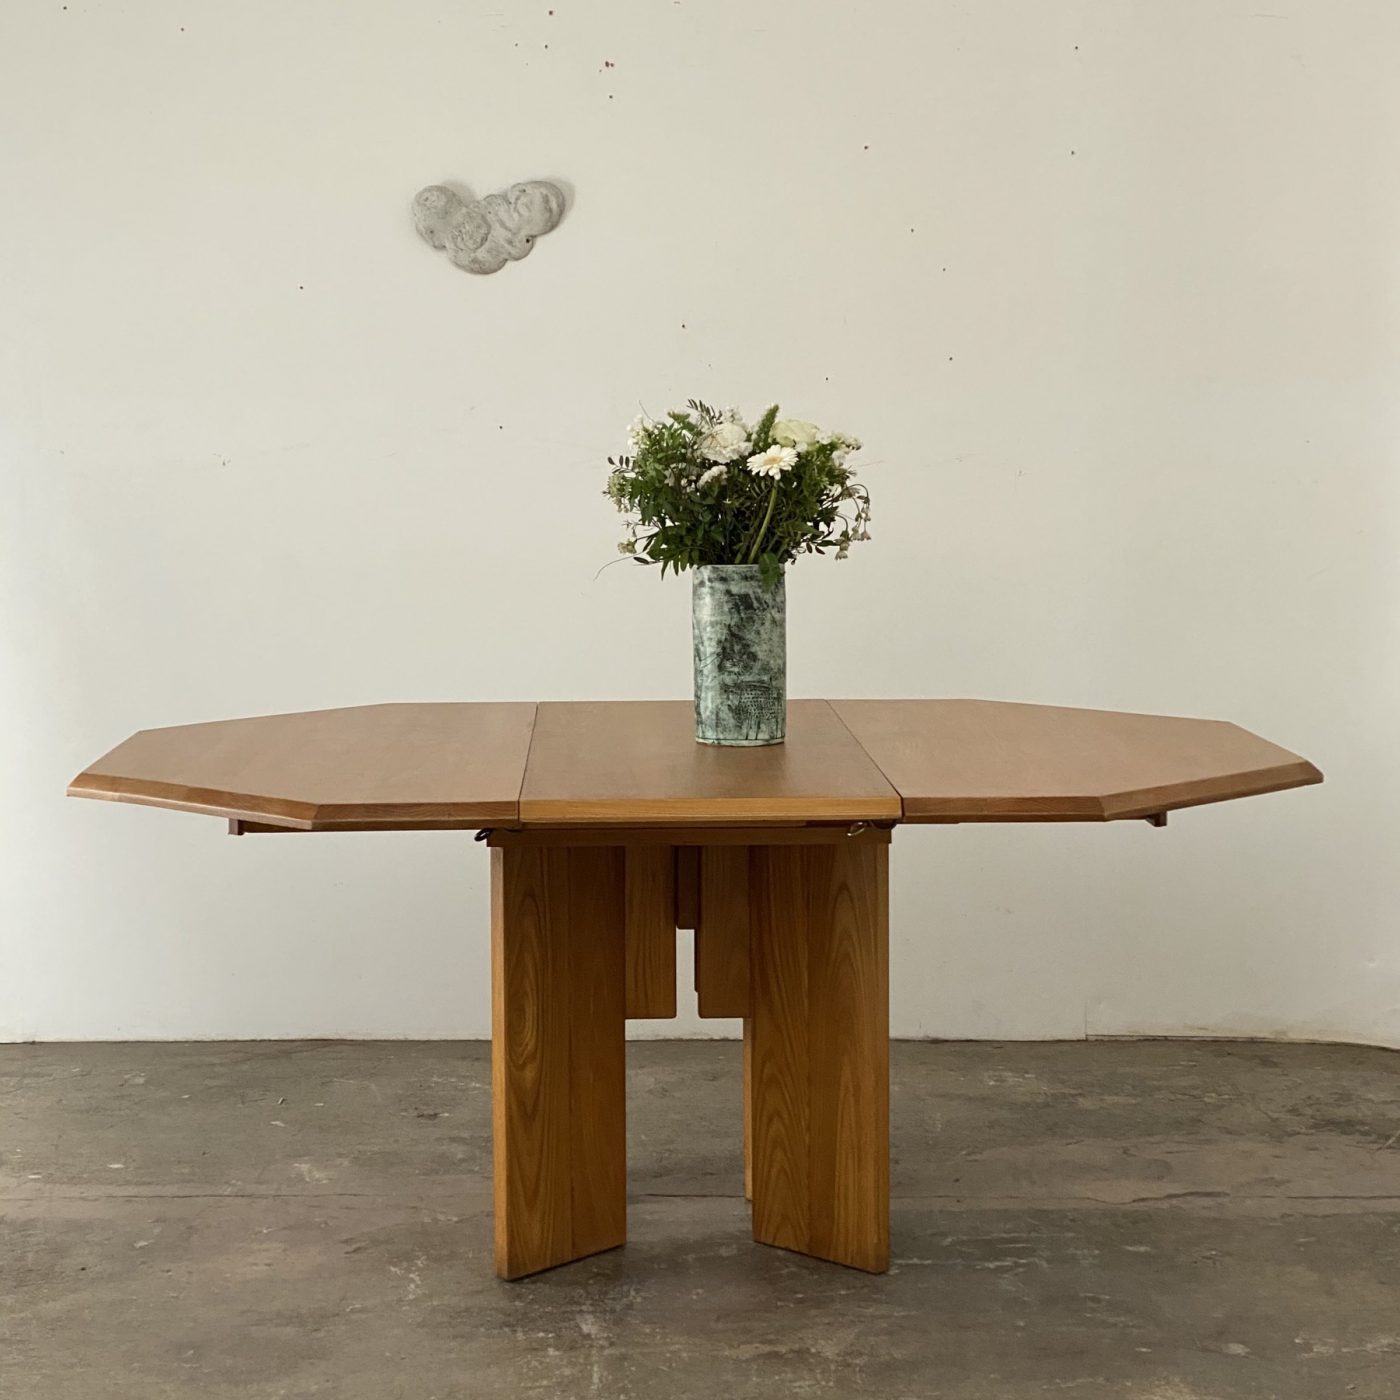 objet-vagabond-elm-wood-table0001